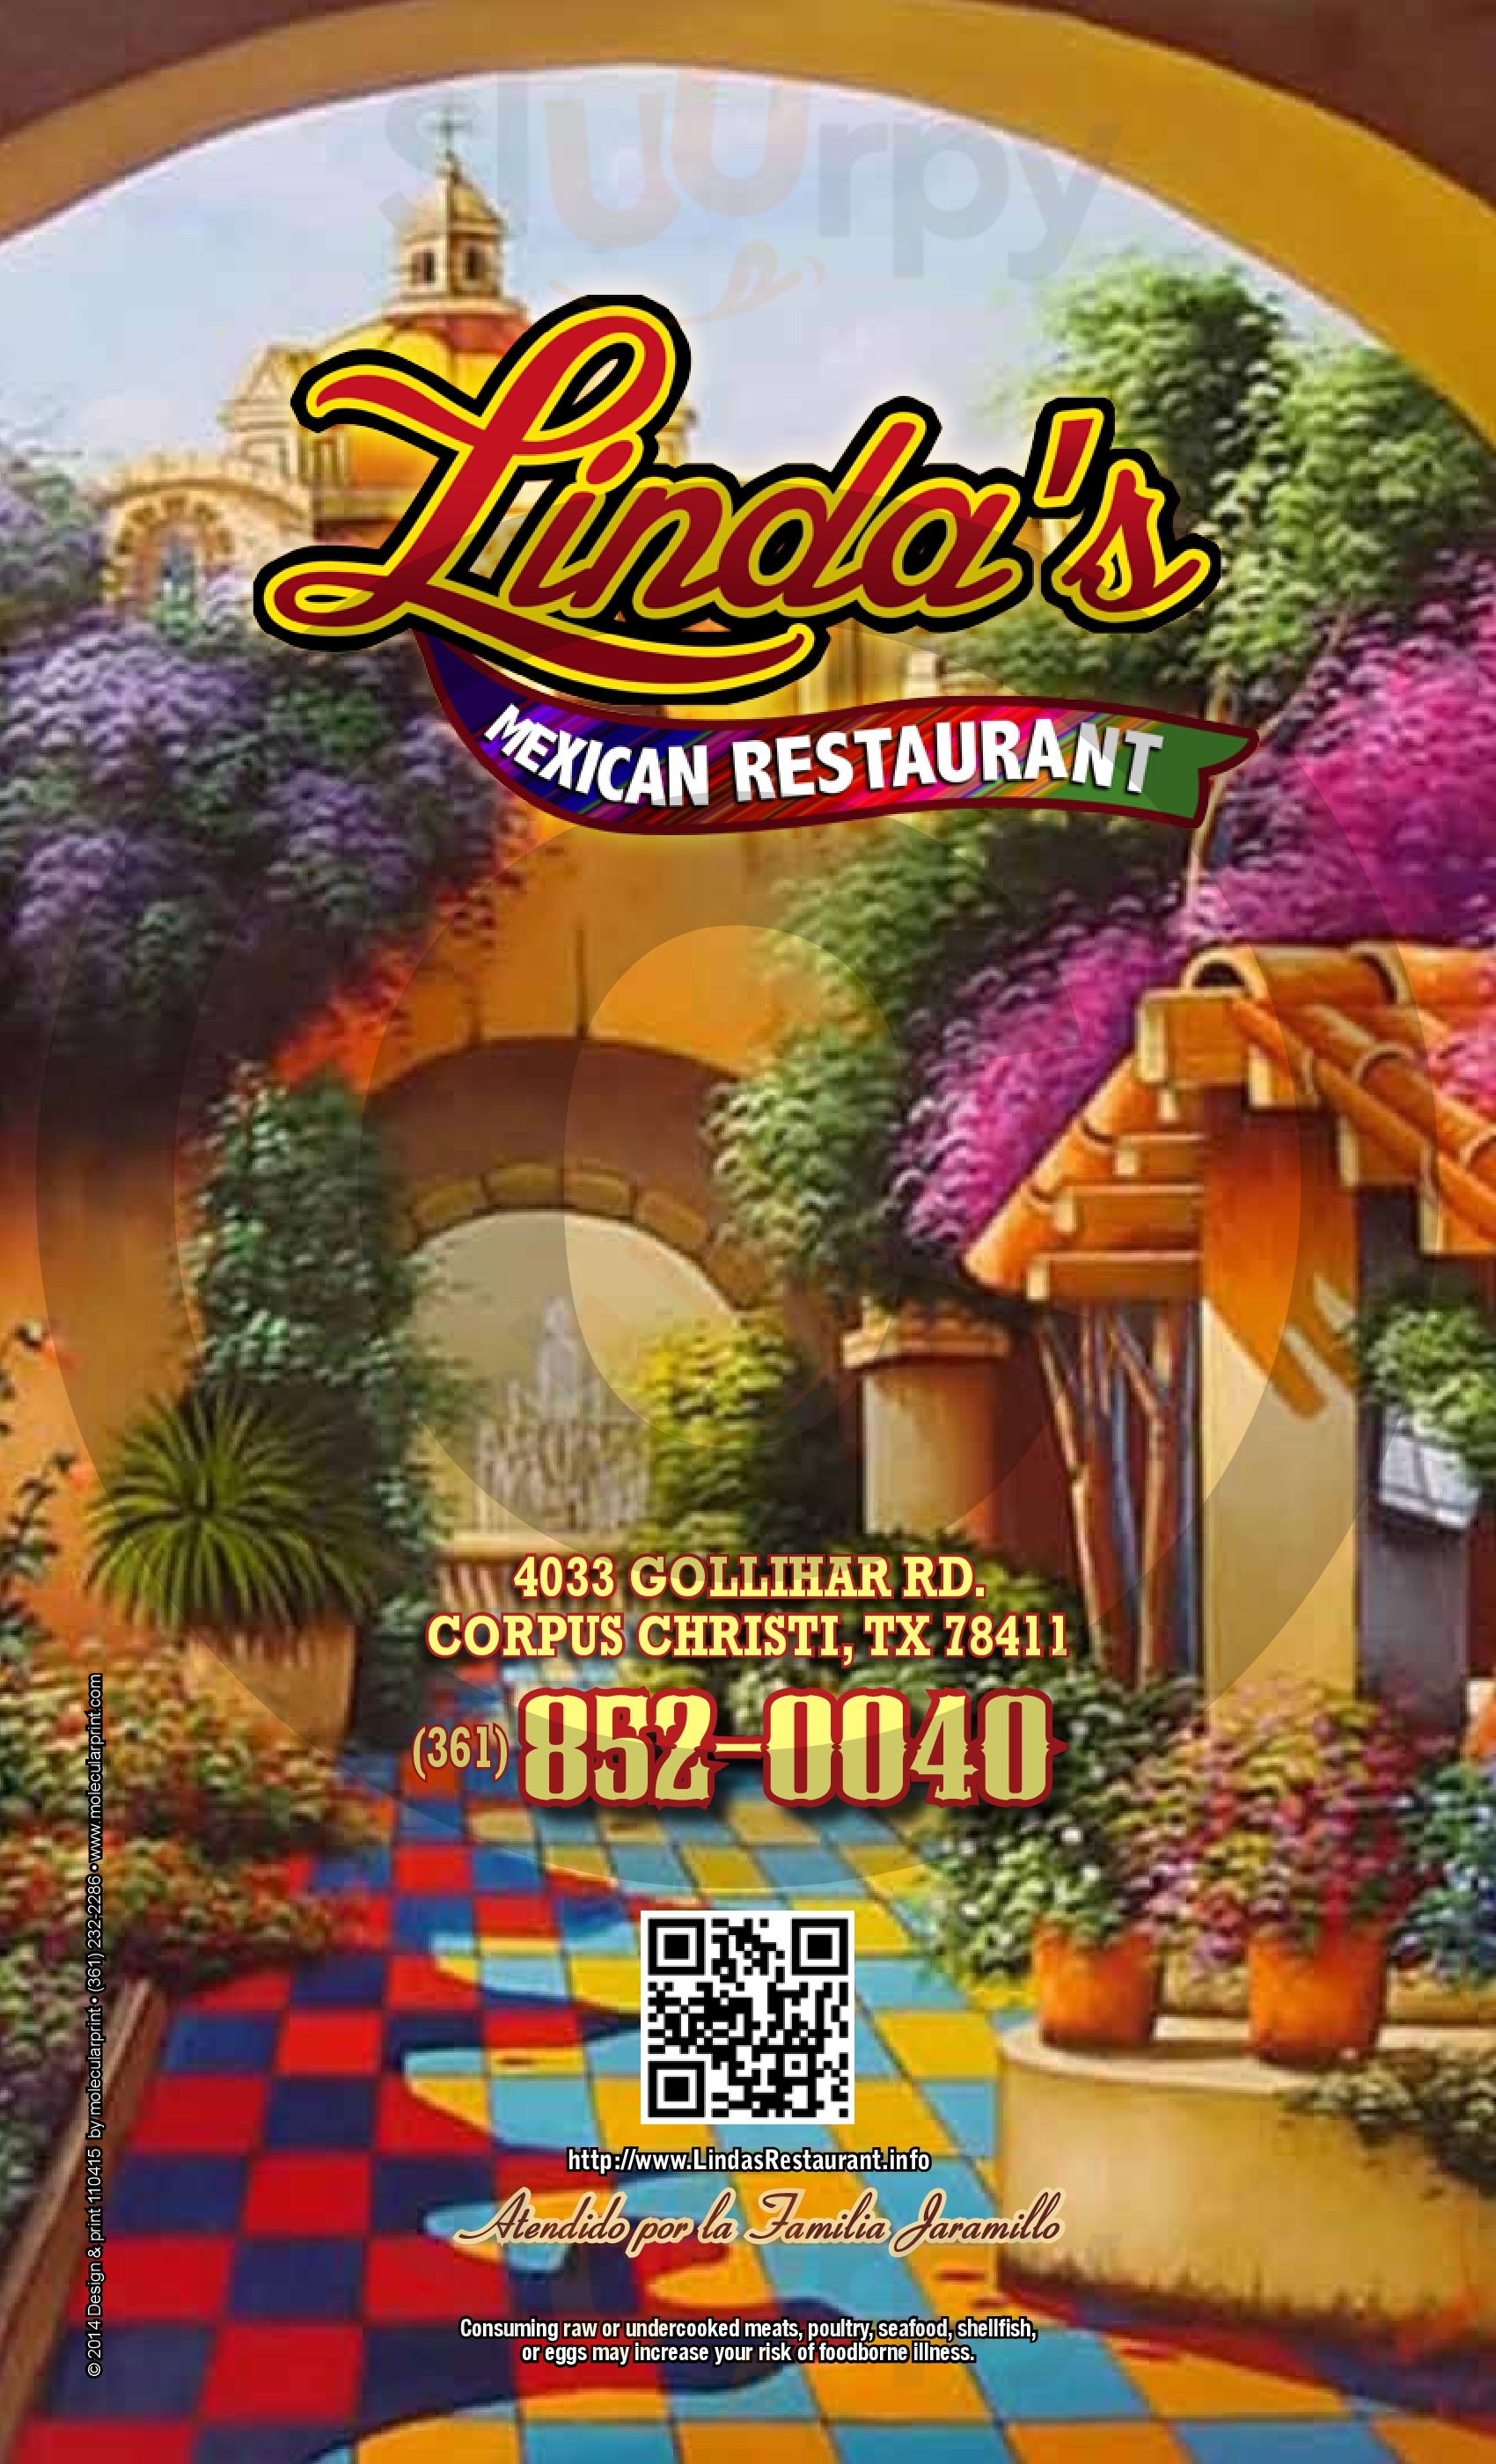 Linda's Restaurant Corpus Christi Menu - 1